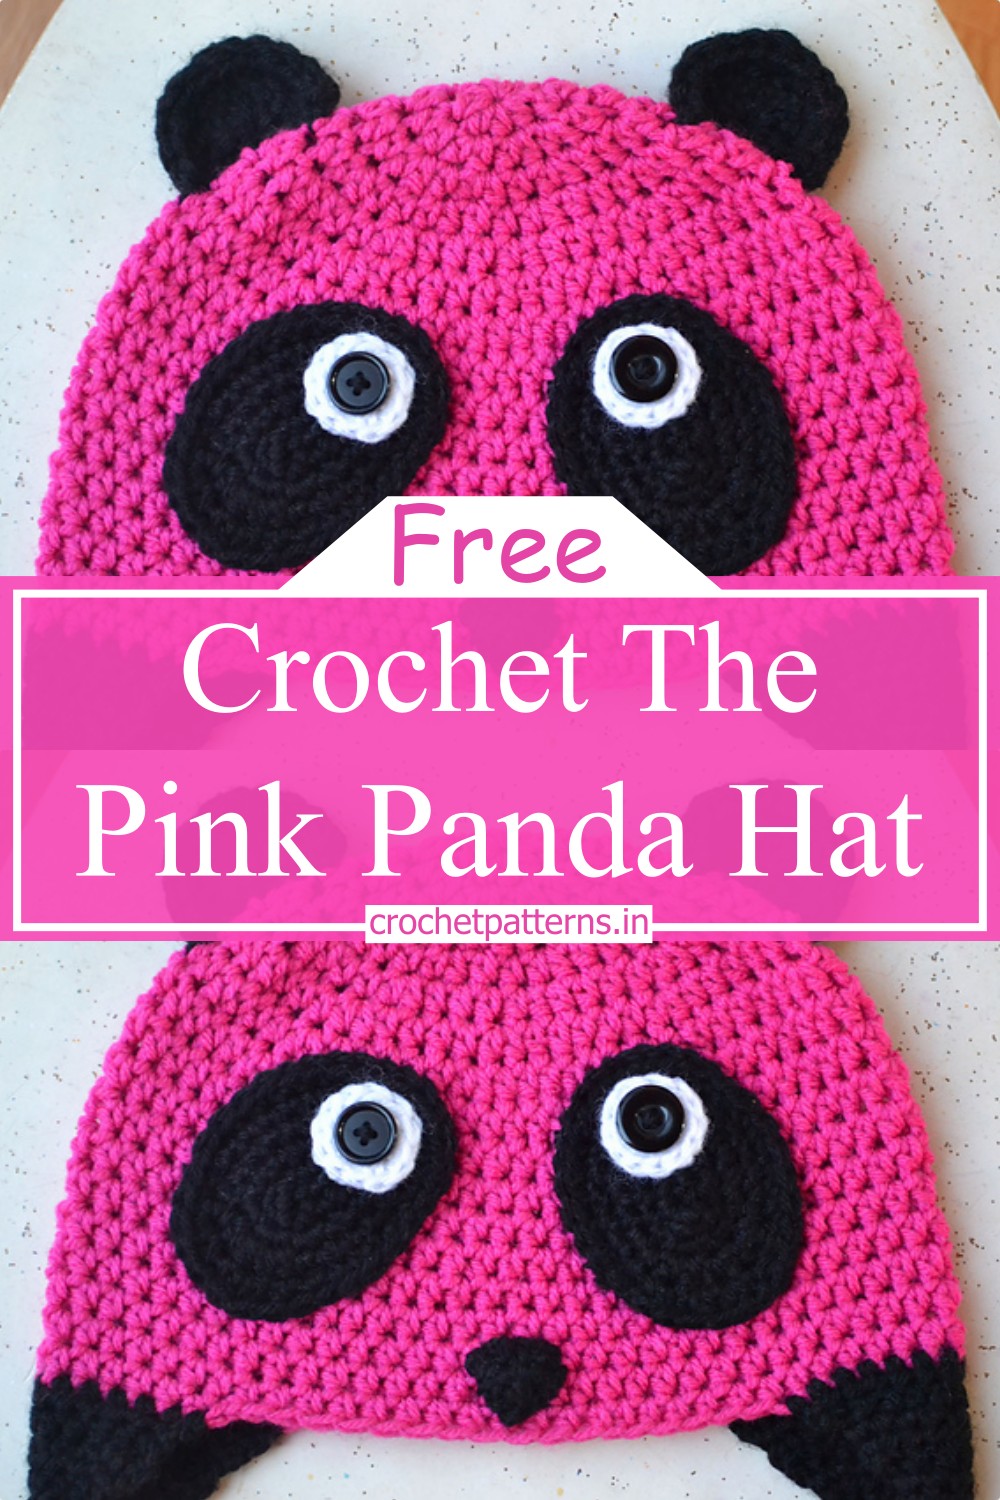 The Pink Panda Hat